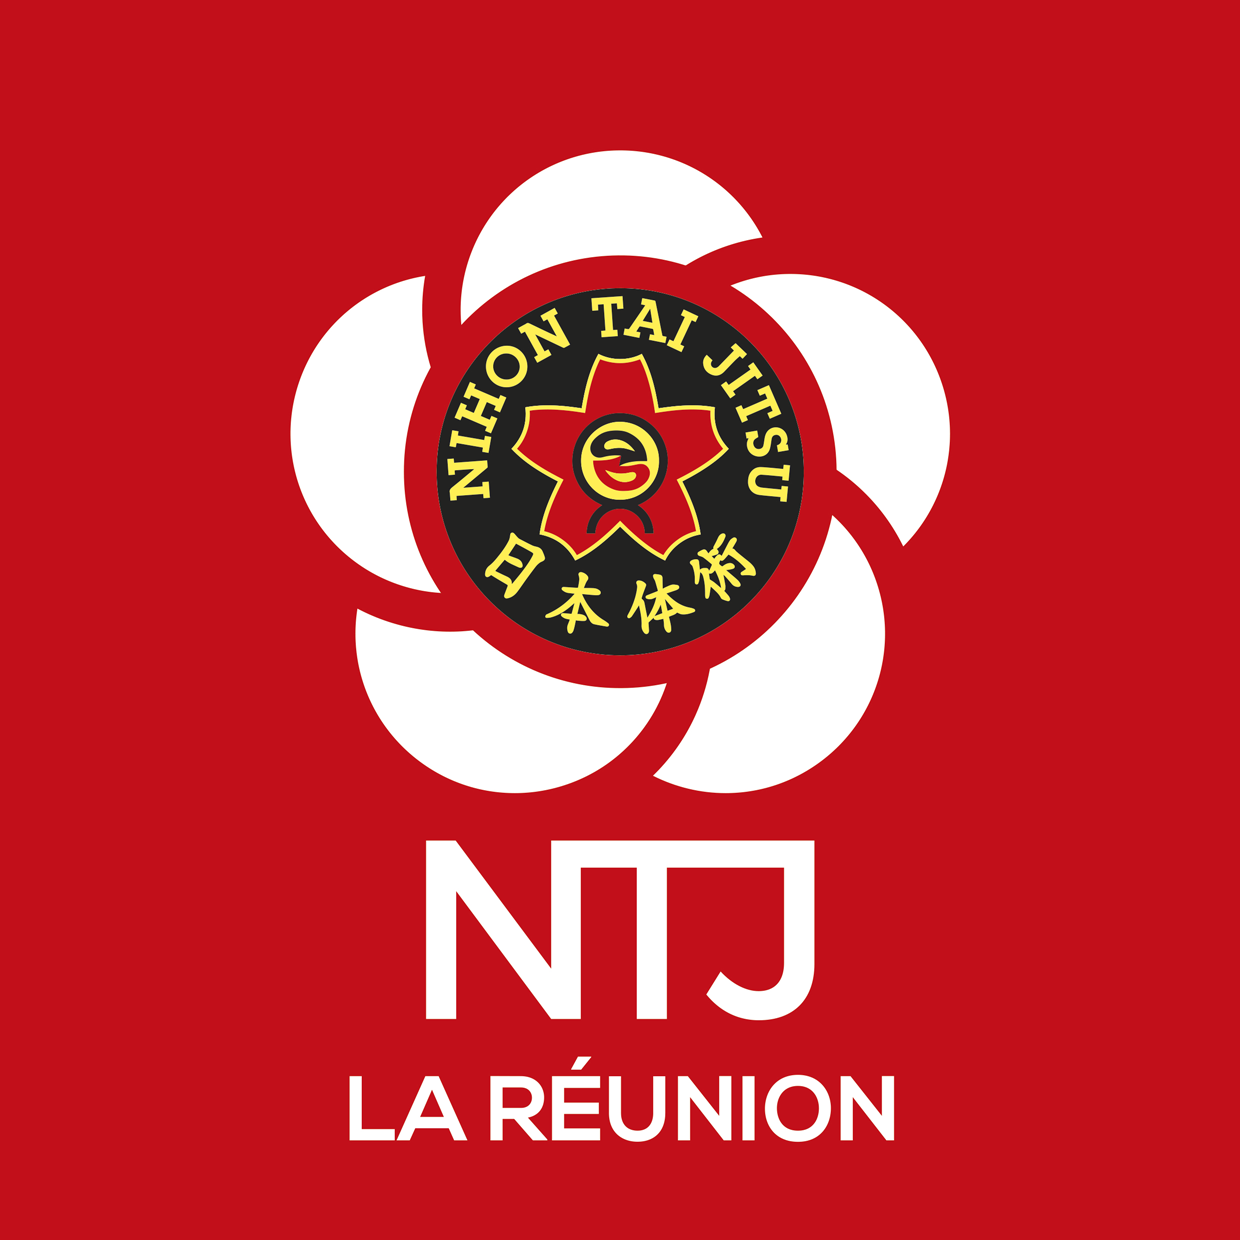 NTJ region LA REUNION logo rvb